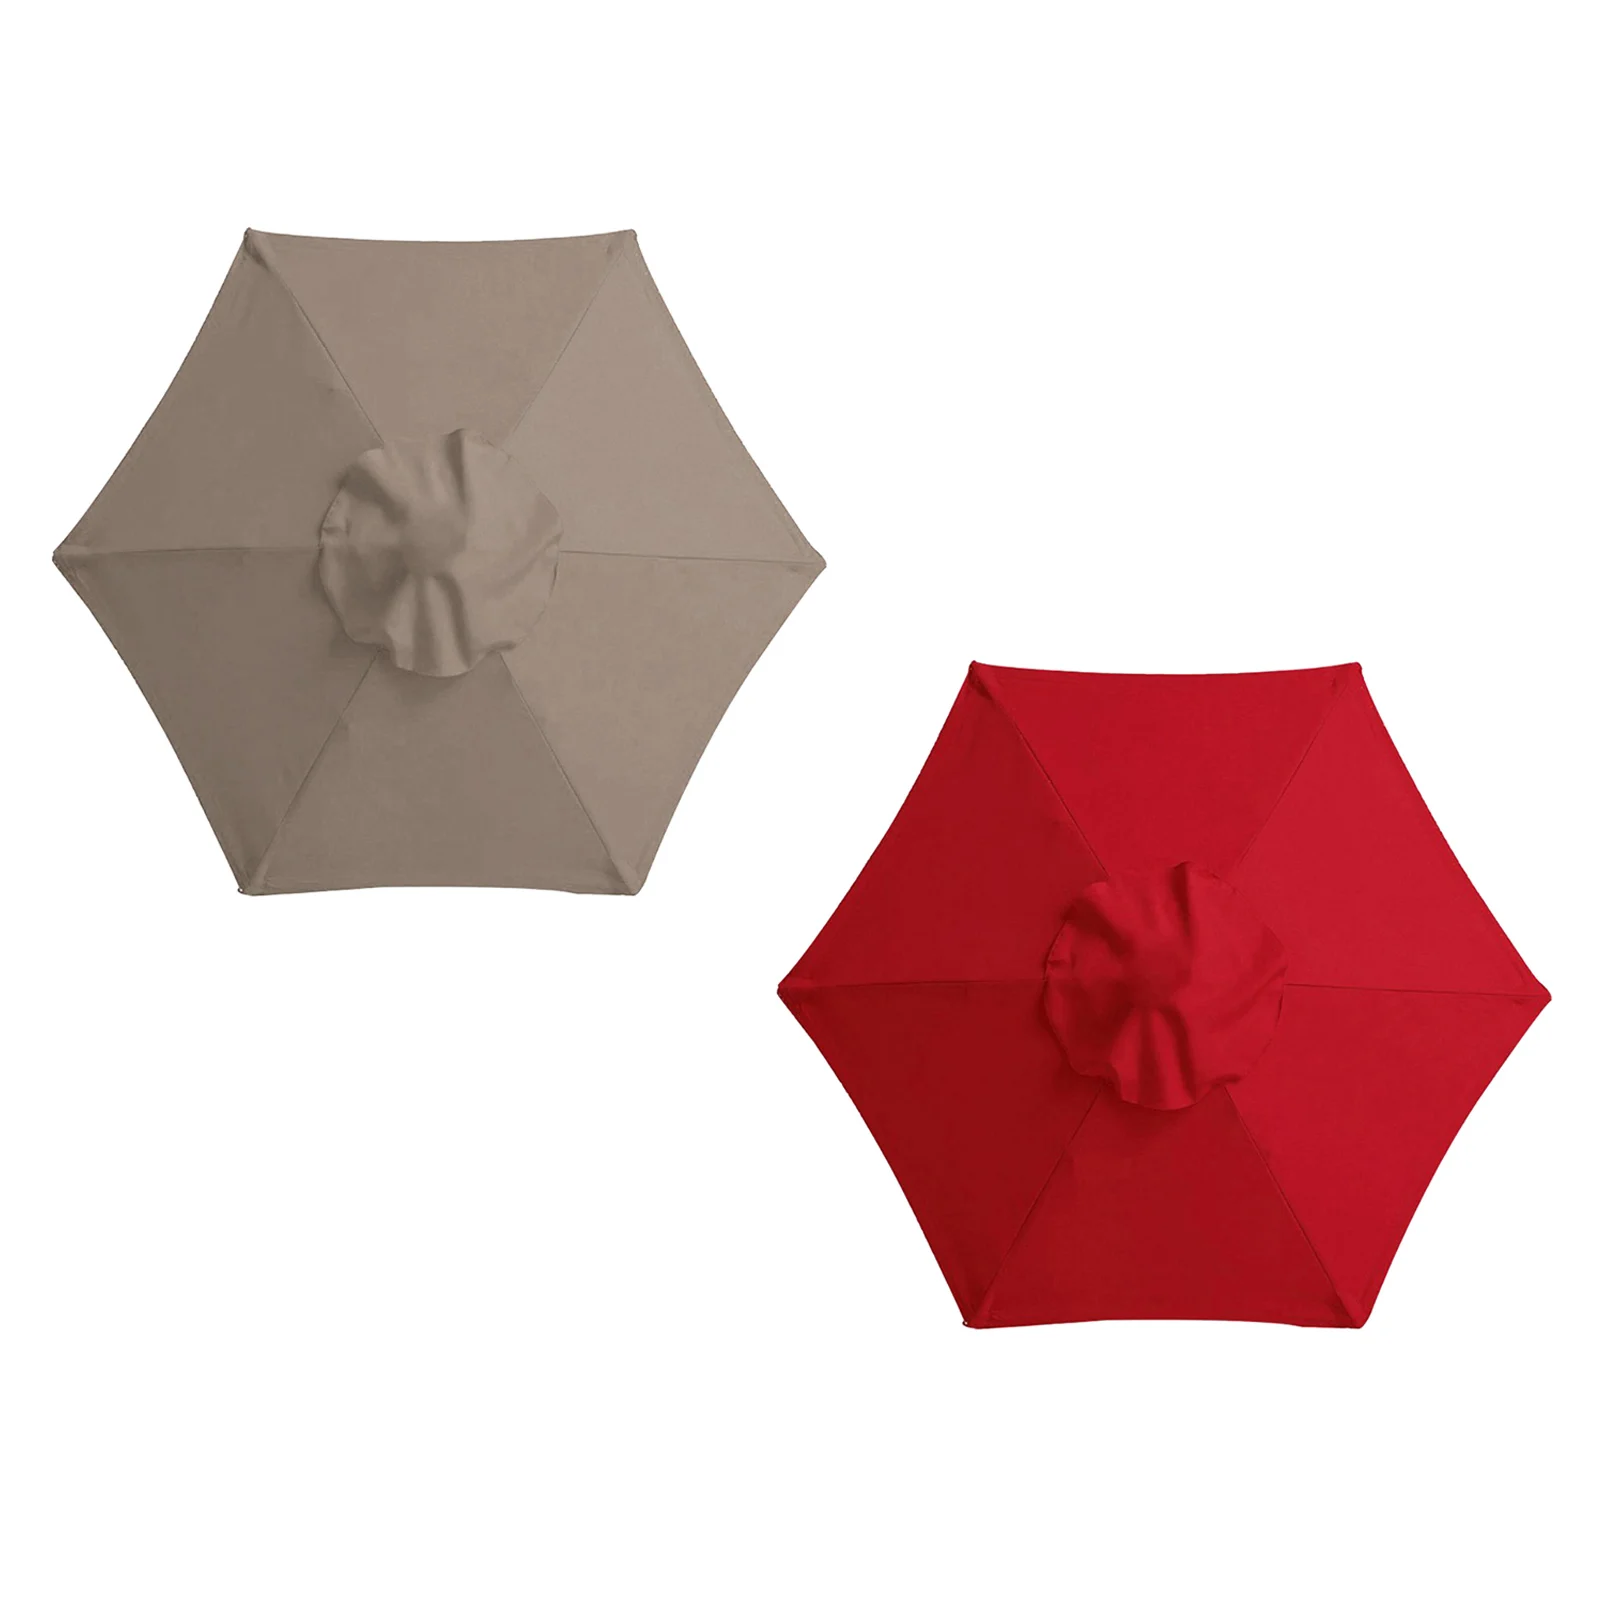 Purovi Premium garden parasol protection cover with rod zippercover made of O 